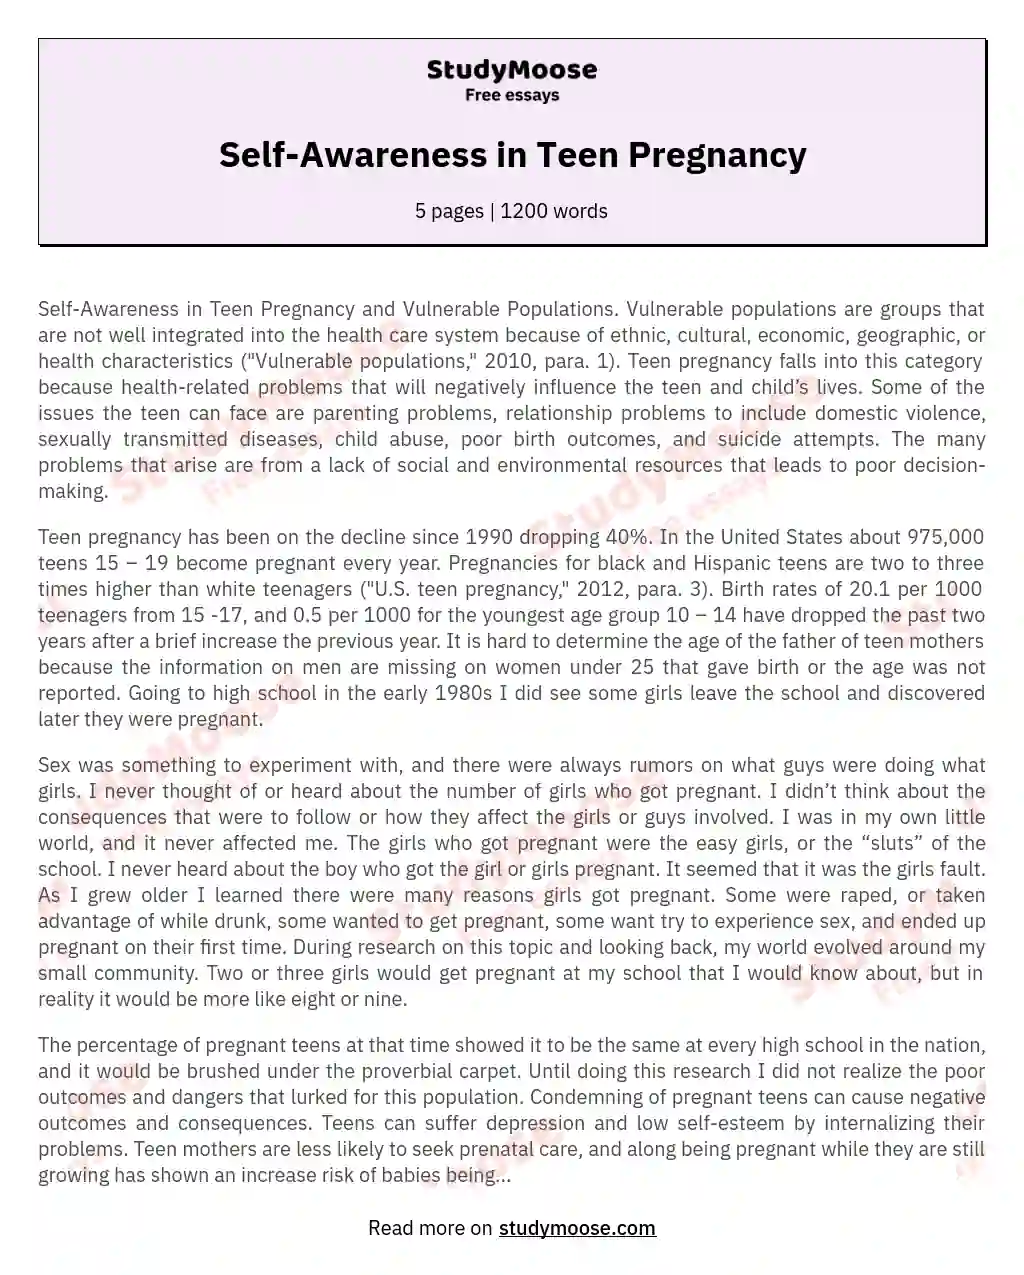 Self-Awareness in Teen Pregnancy